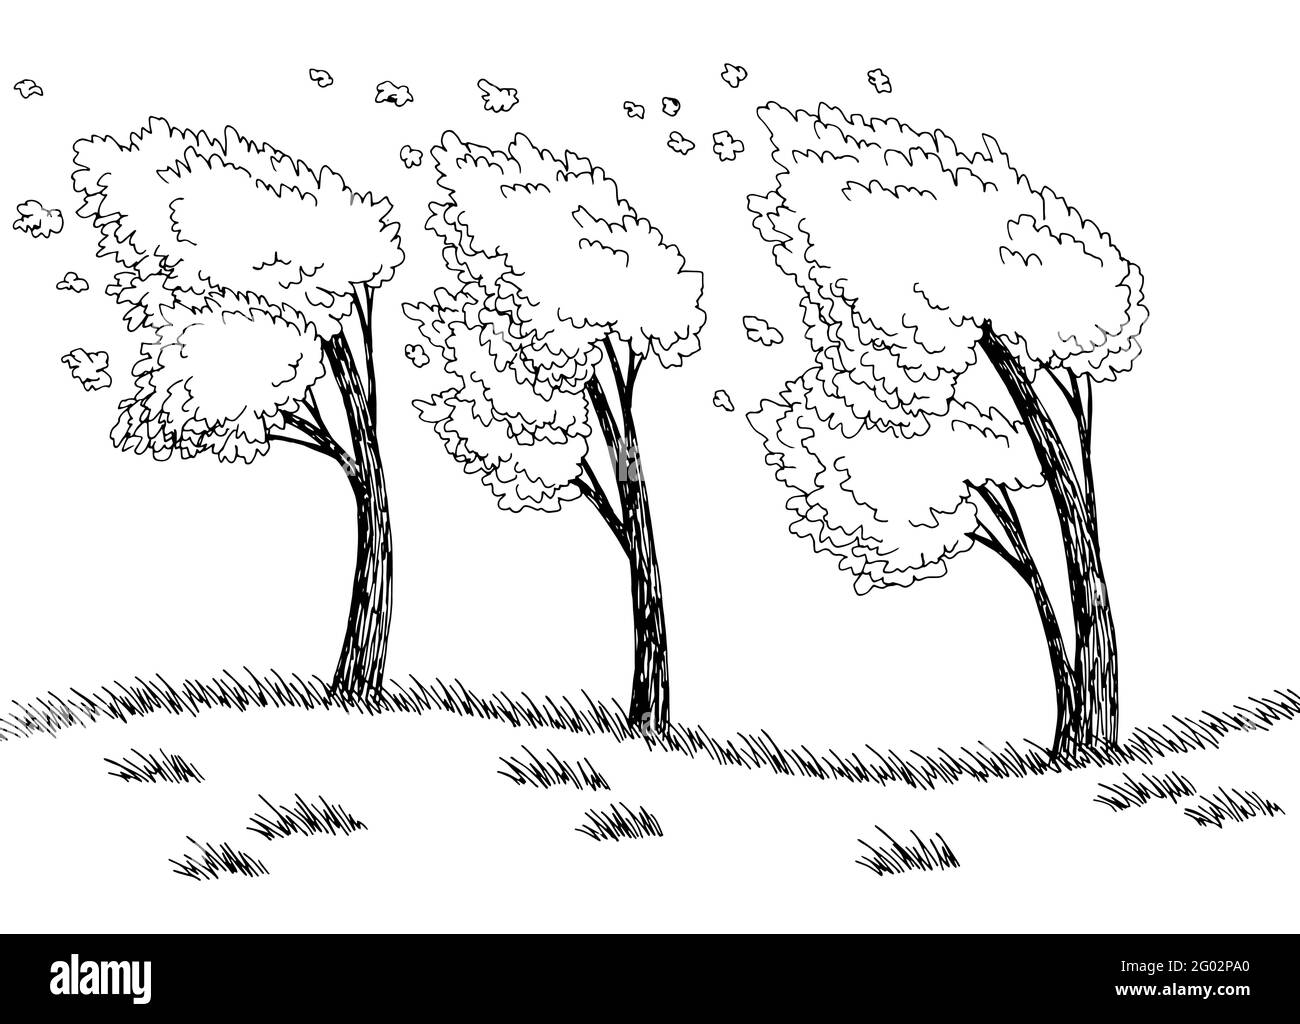 Wind Sketch PNG Transparent Images Free Download | Vector Files | Pngtree